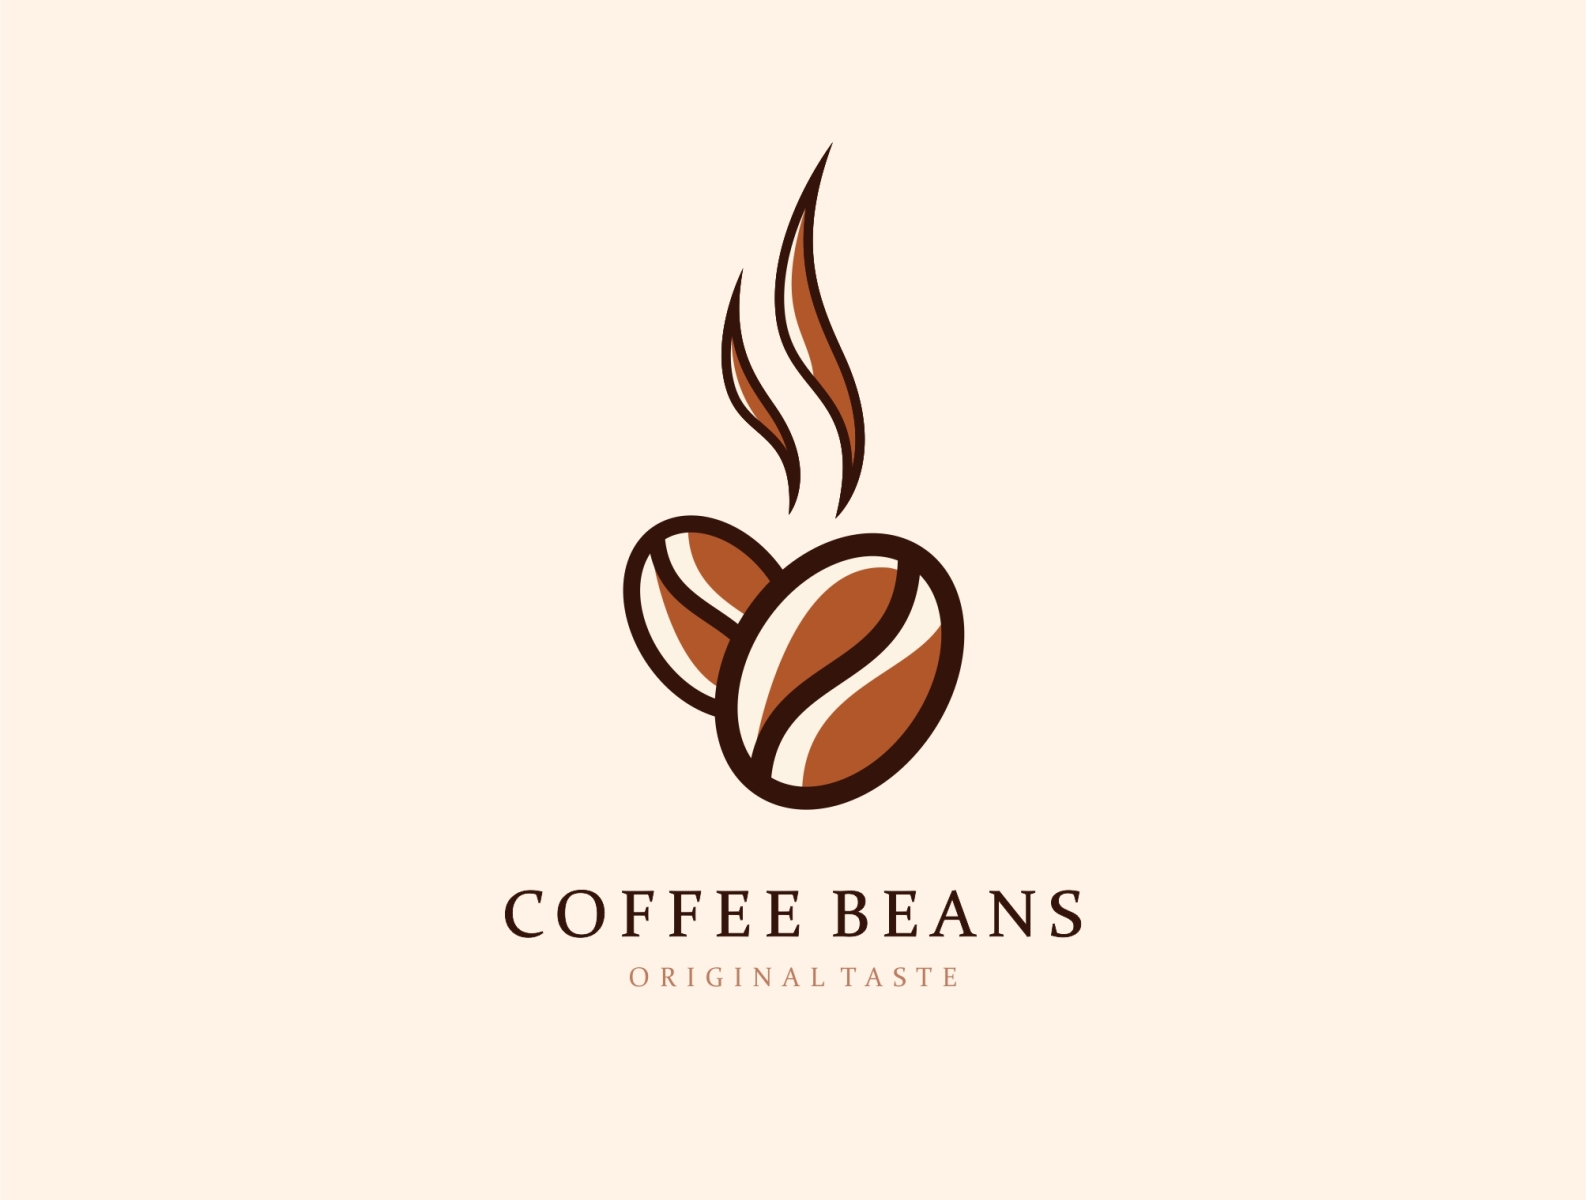 Coffee Bean logo Template | PosterMyWall